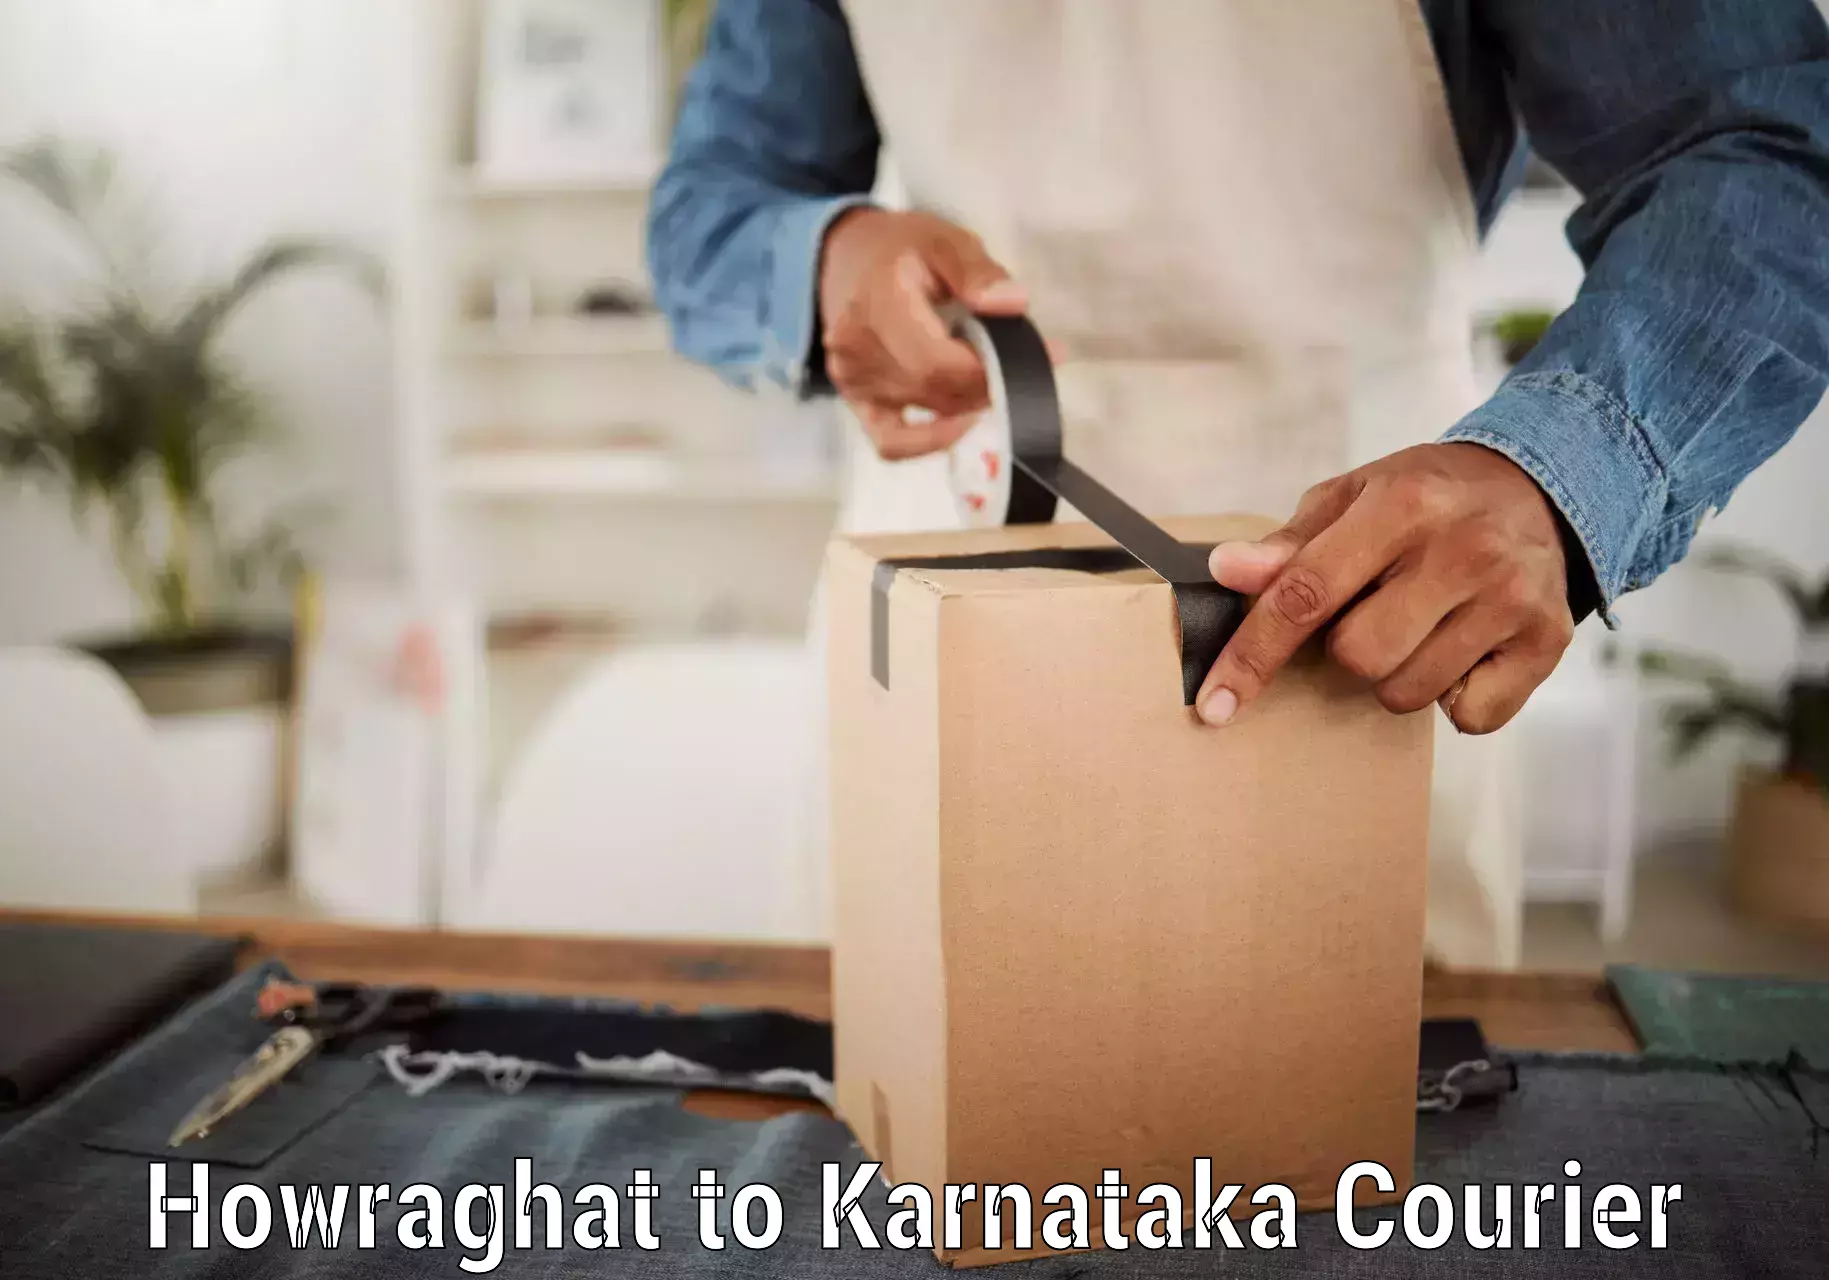 Efficient parcel service Howraghat to Anavatti